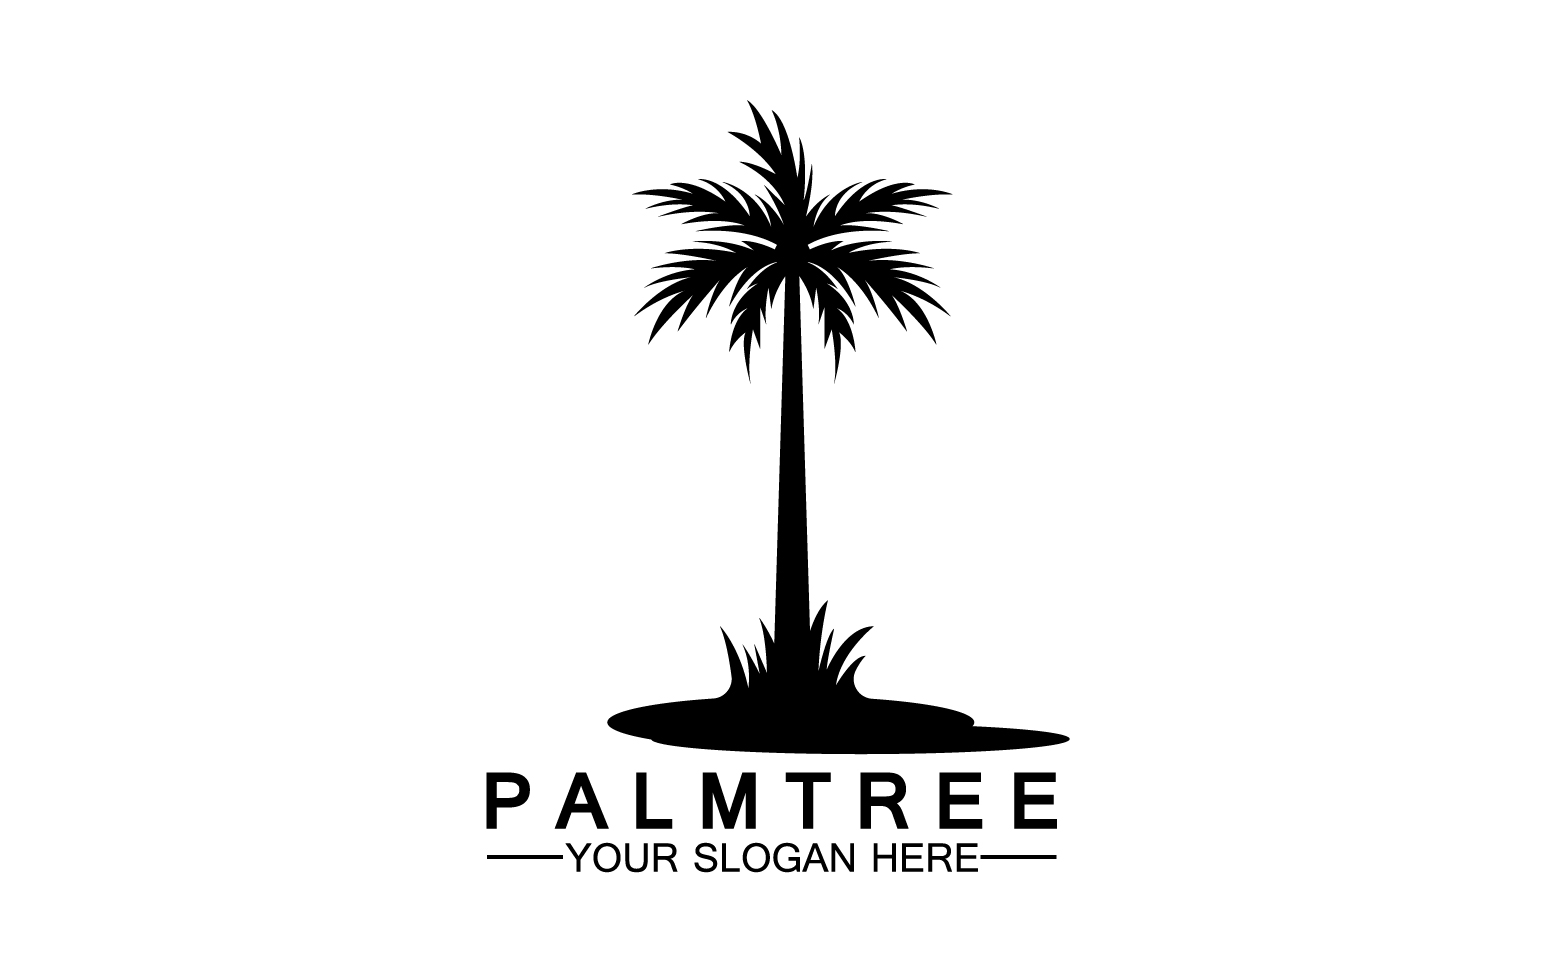 Palm tree hipster vintage logo vector icon illustration v7